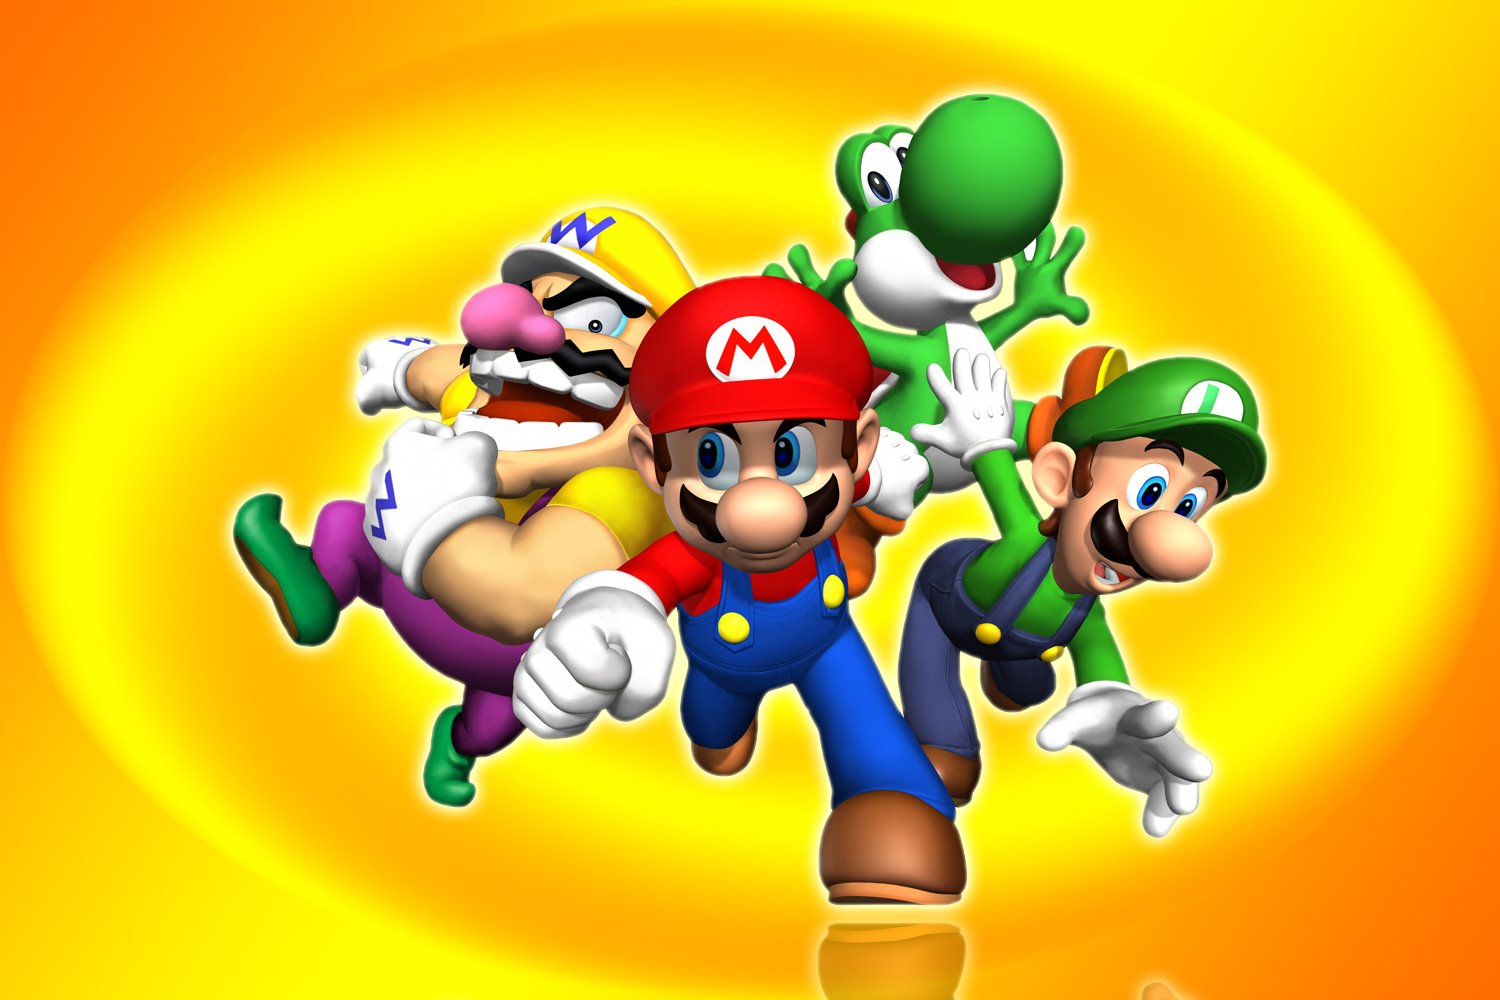 Супер марио бразерс. Супер Марио супермарио. Супер Марио герои игры. Марио (персонаж игр). Супер братья Марио игра.